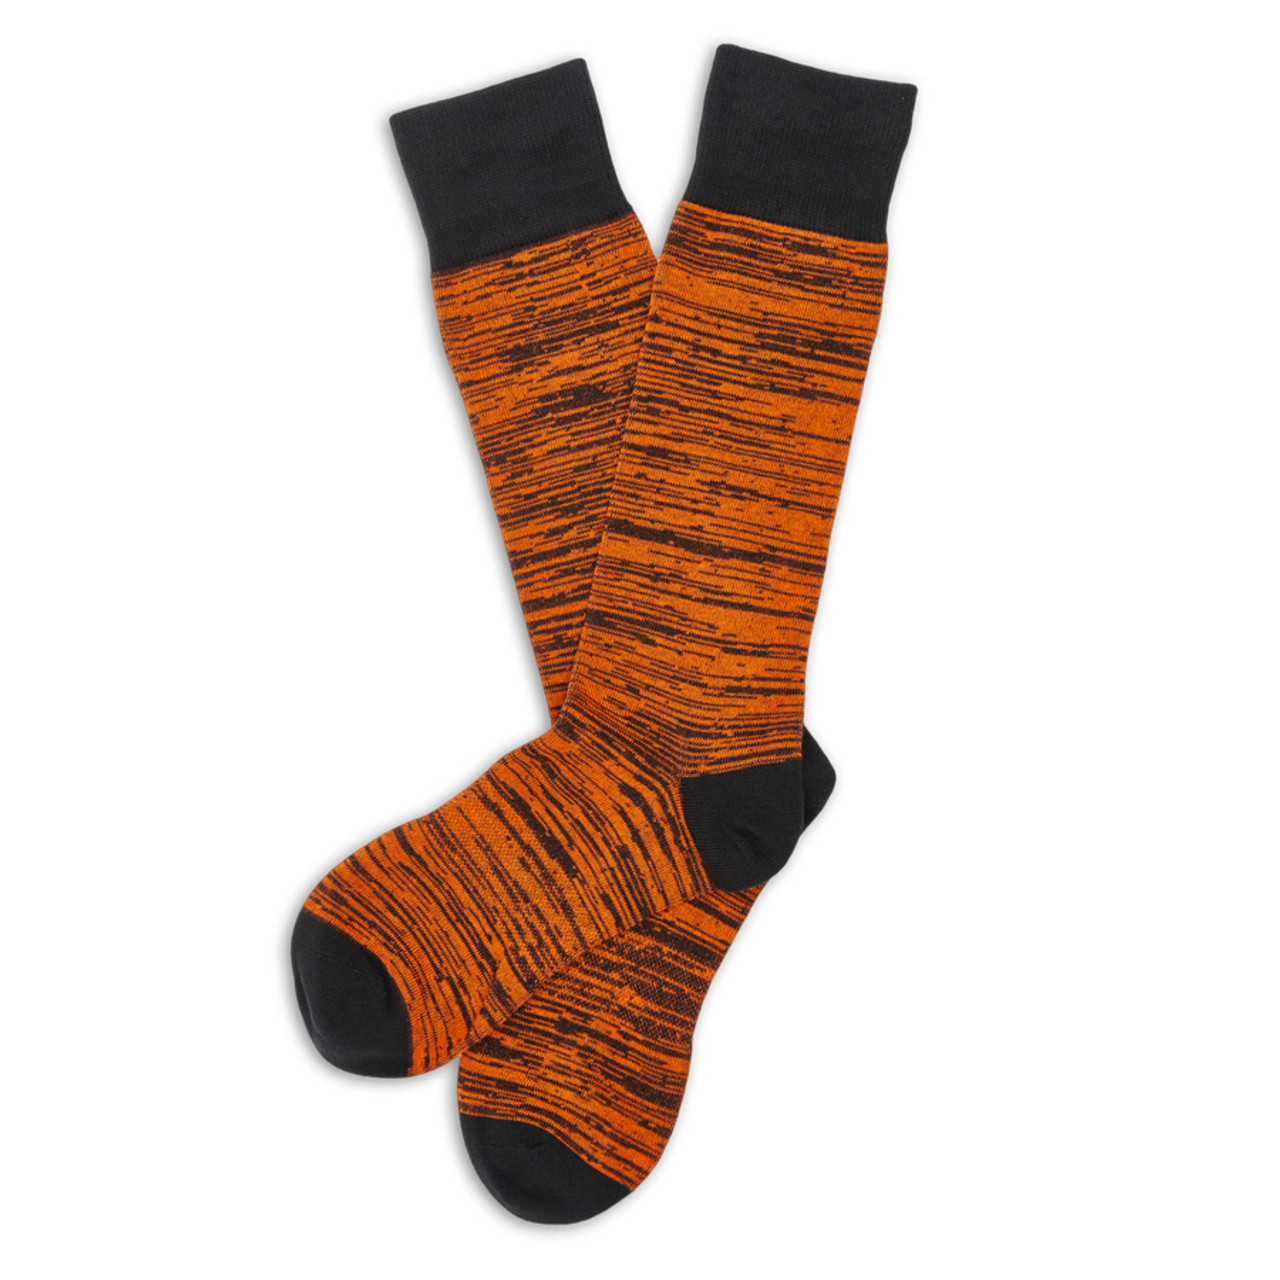 Orange and Black Dress Socks, 4 Pack Sock Bundle